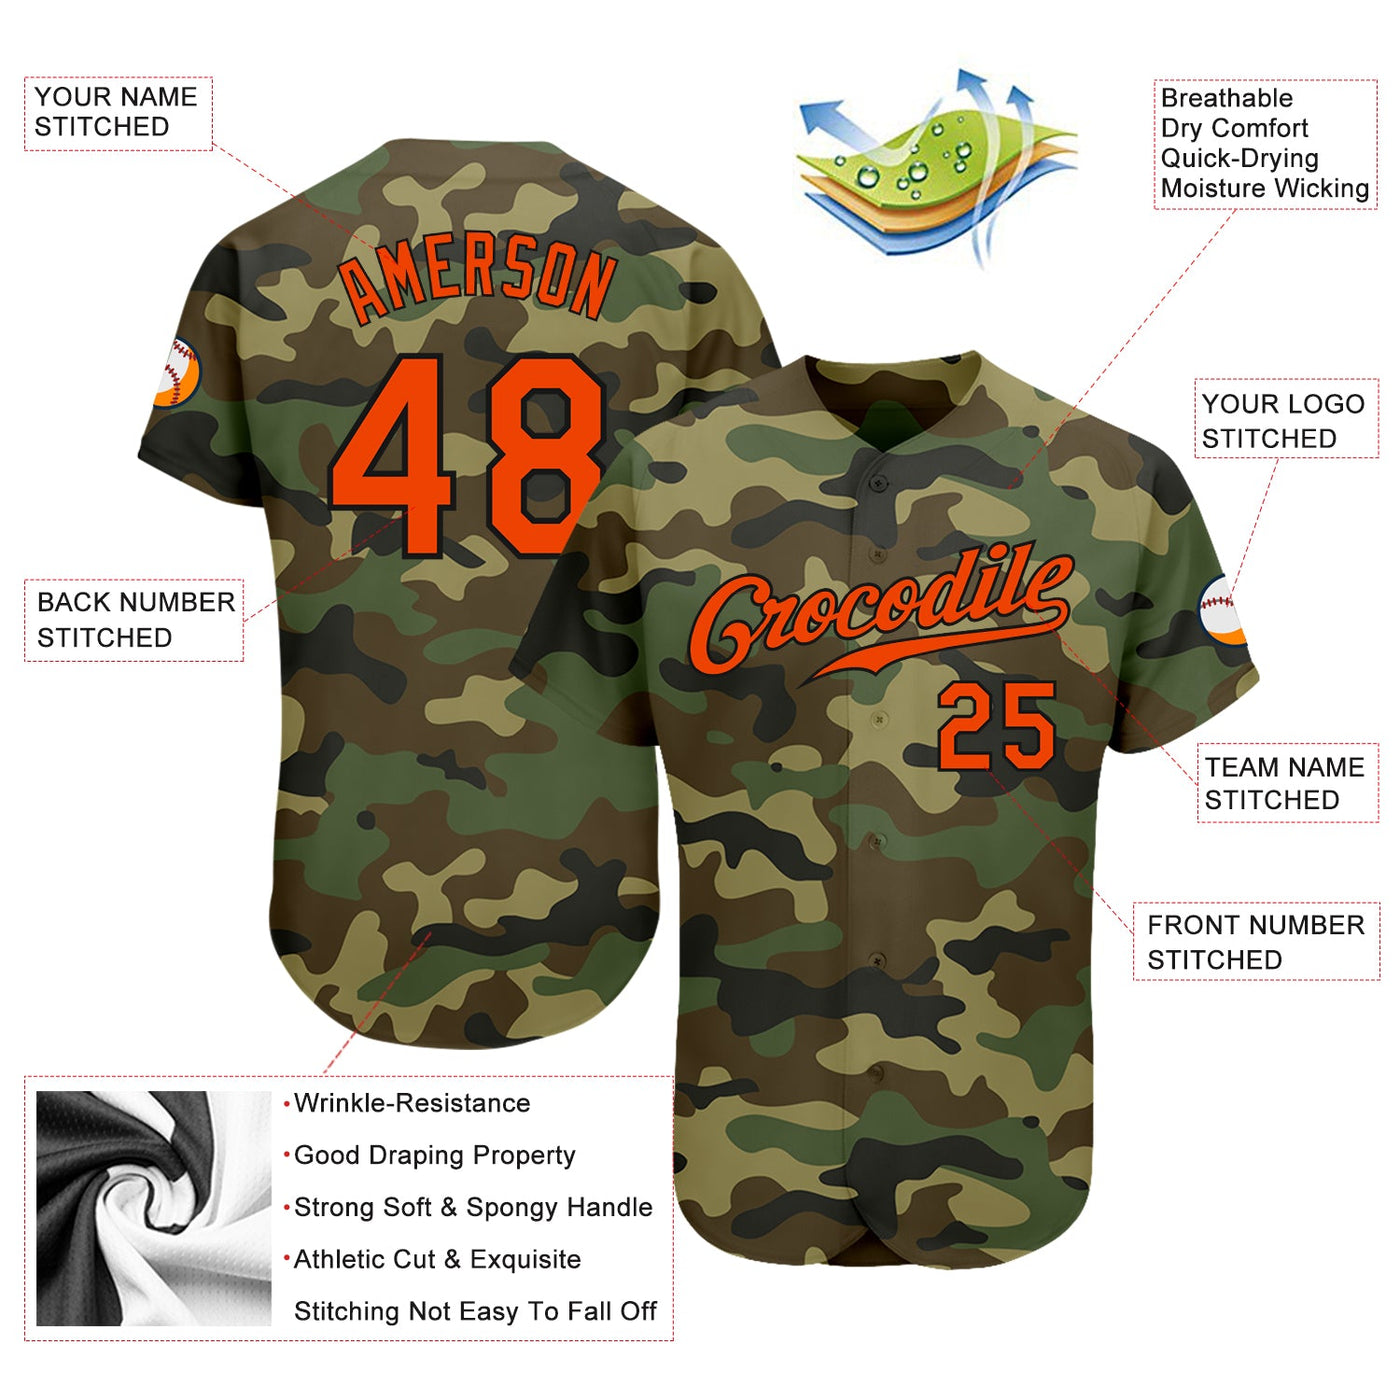 Custom Camo Orange-Black Authentic Salute To Service Baseball Jersey - Owls Matrix LTD